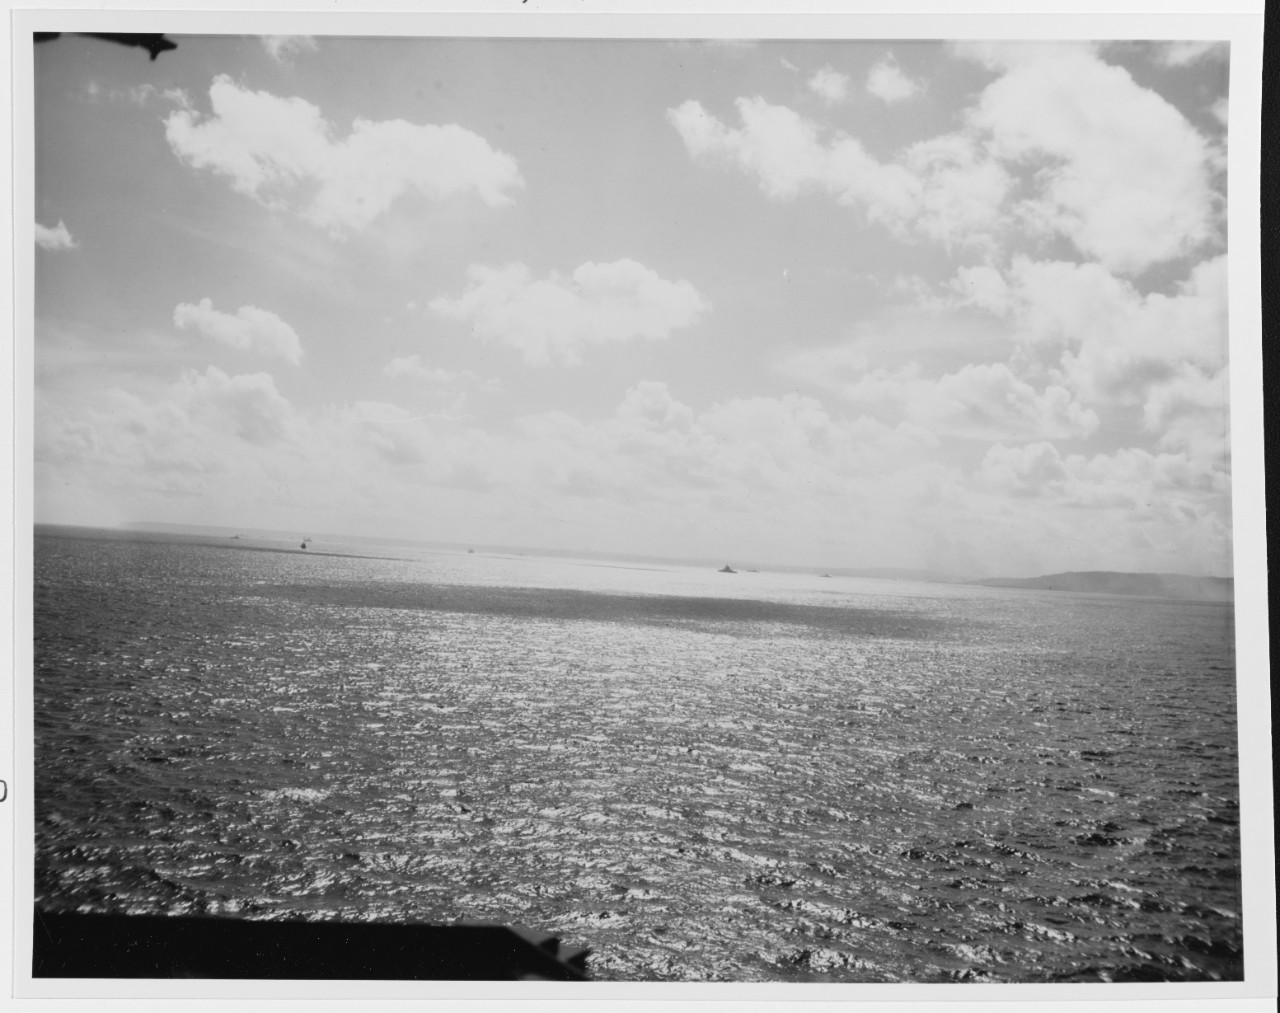 Guam Invasion, July 1944